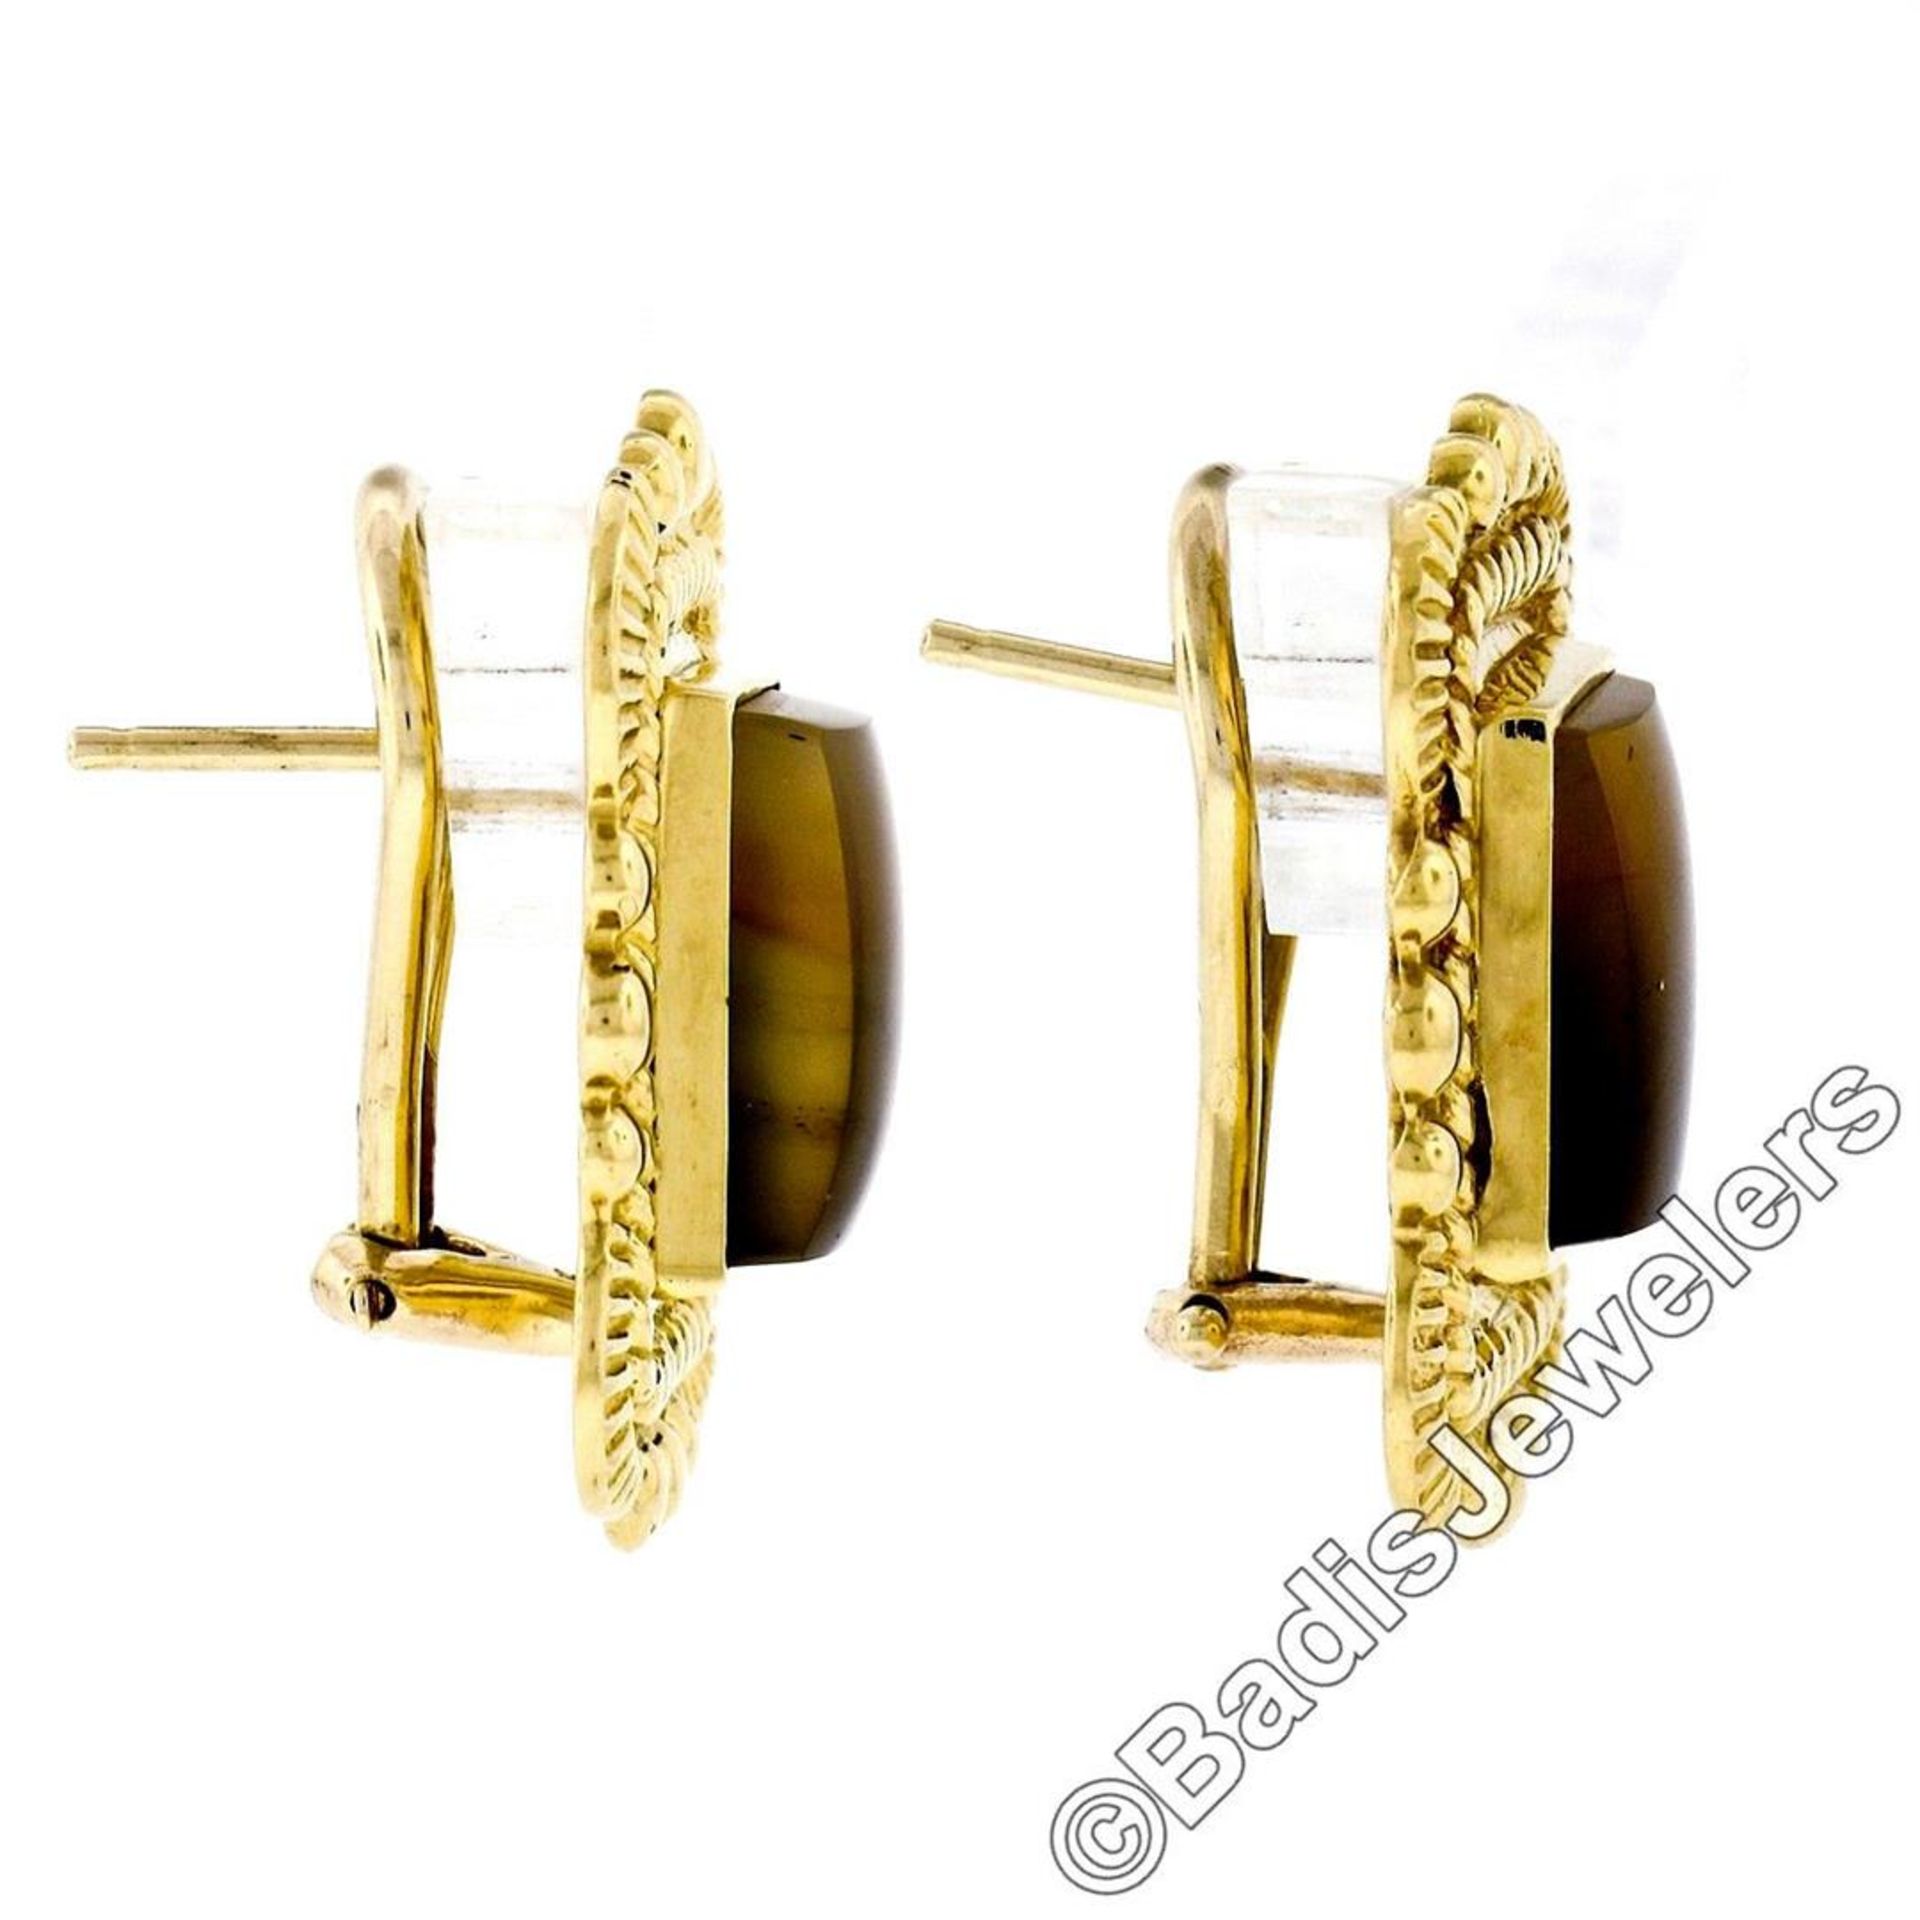 Scott Gauthier 18kt Yellow Gold Rectangular Banded Agate Earrings - Image 4 of 6